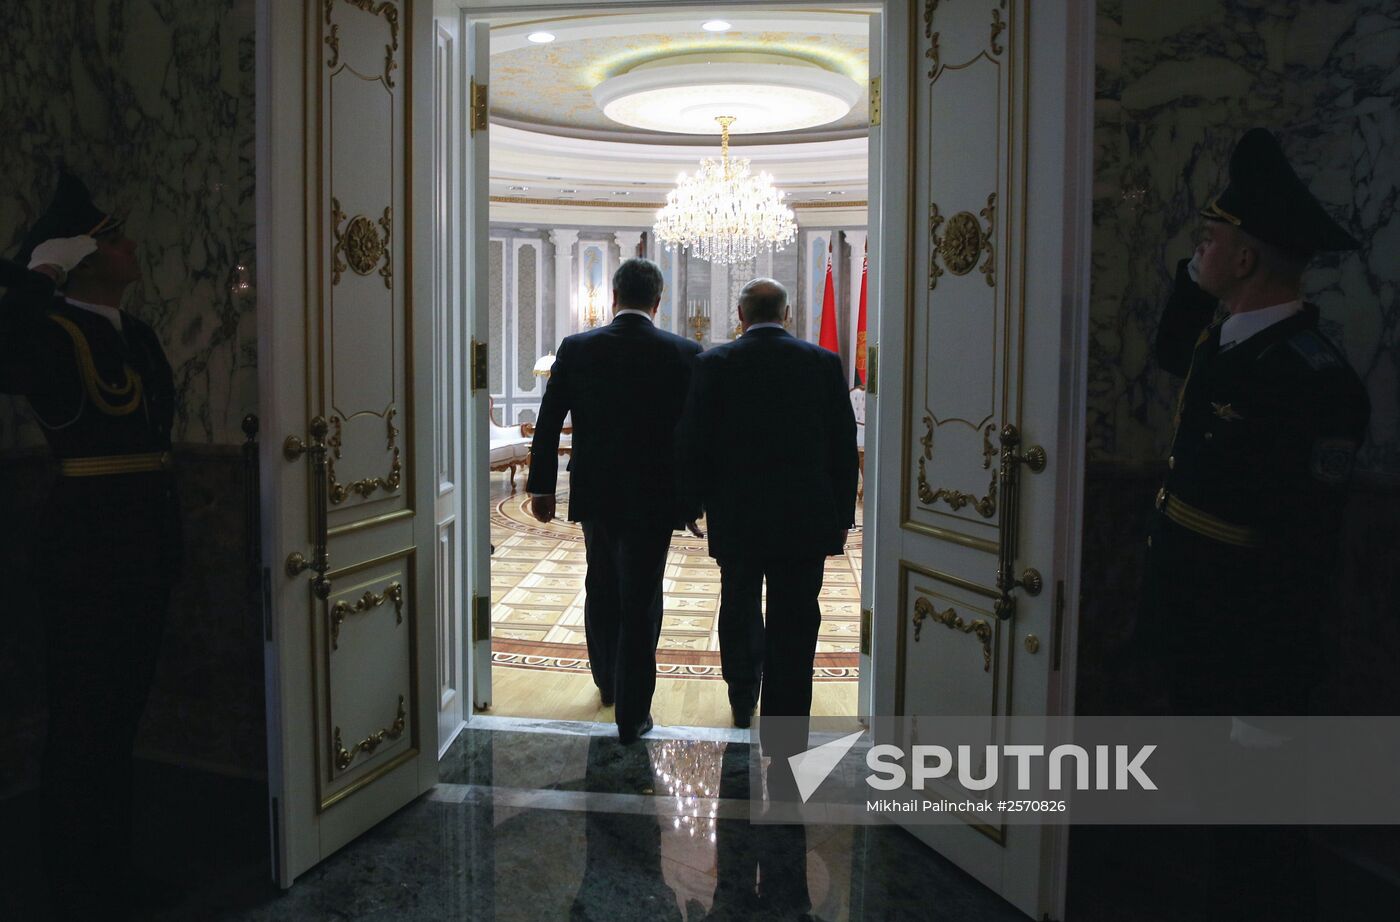 Russian, German, French and Ukrainian leaders meet for talks in Minsk